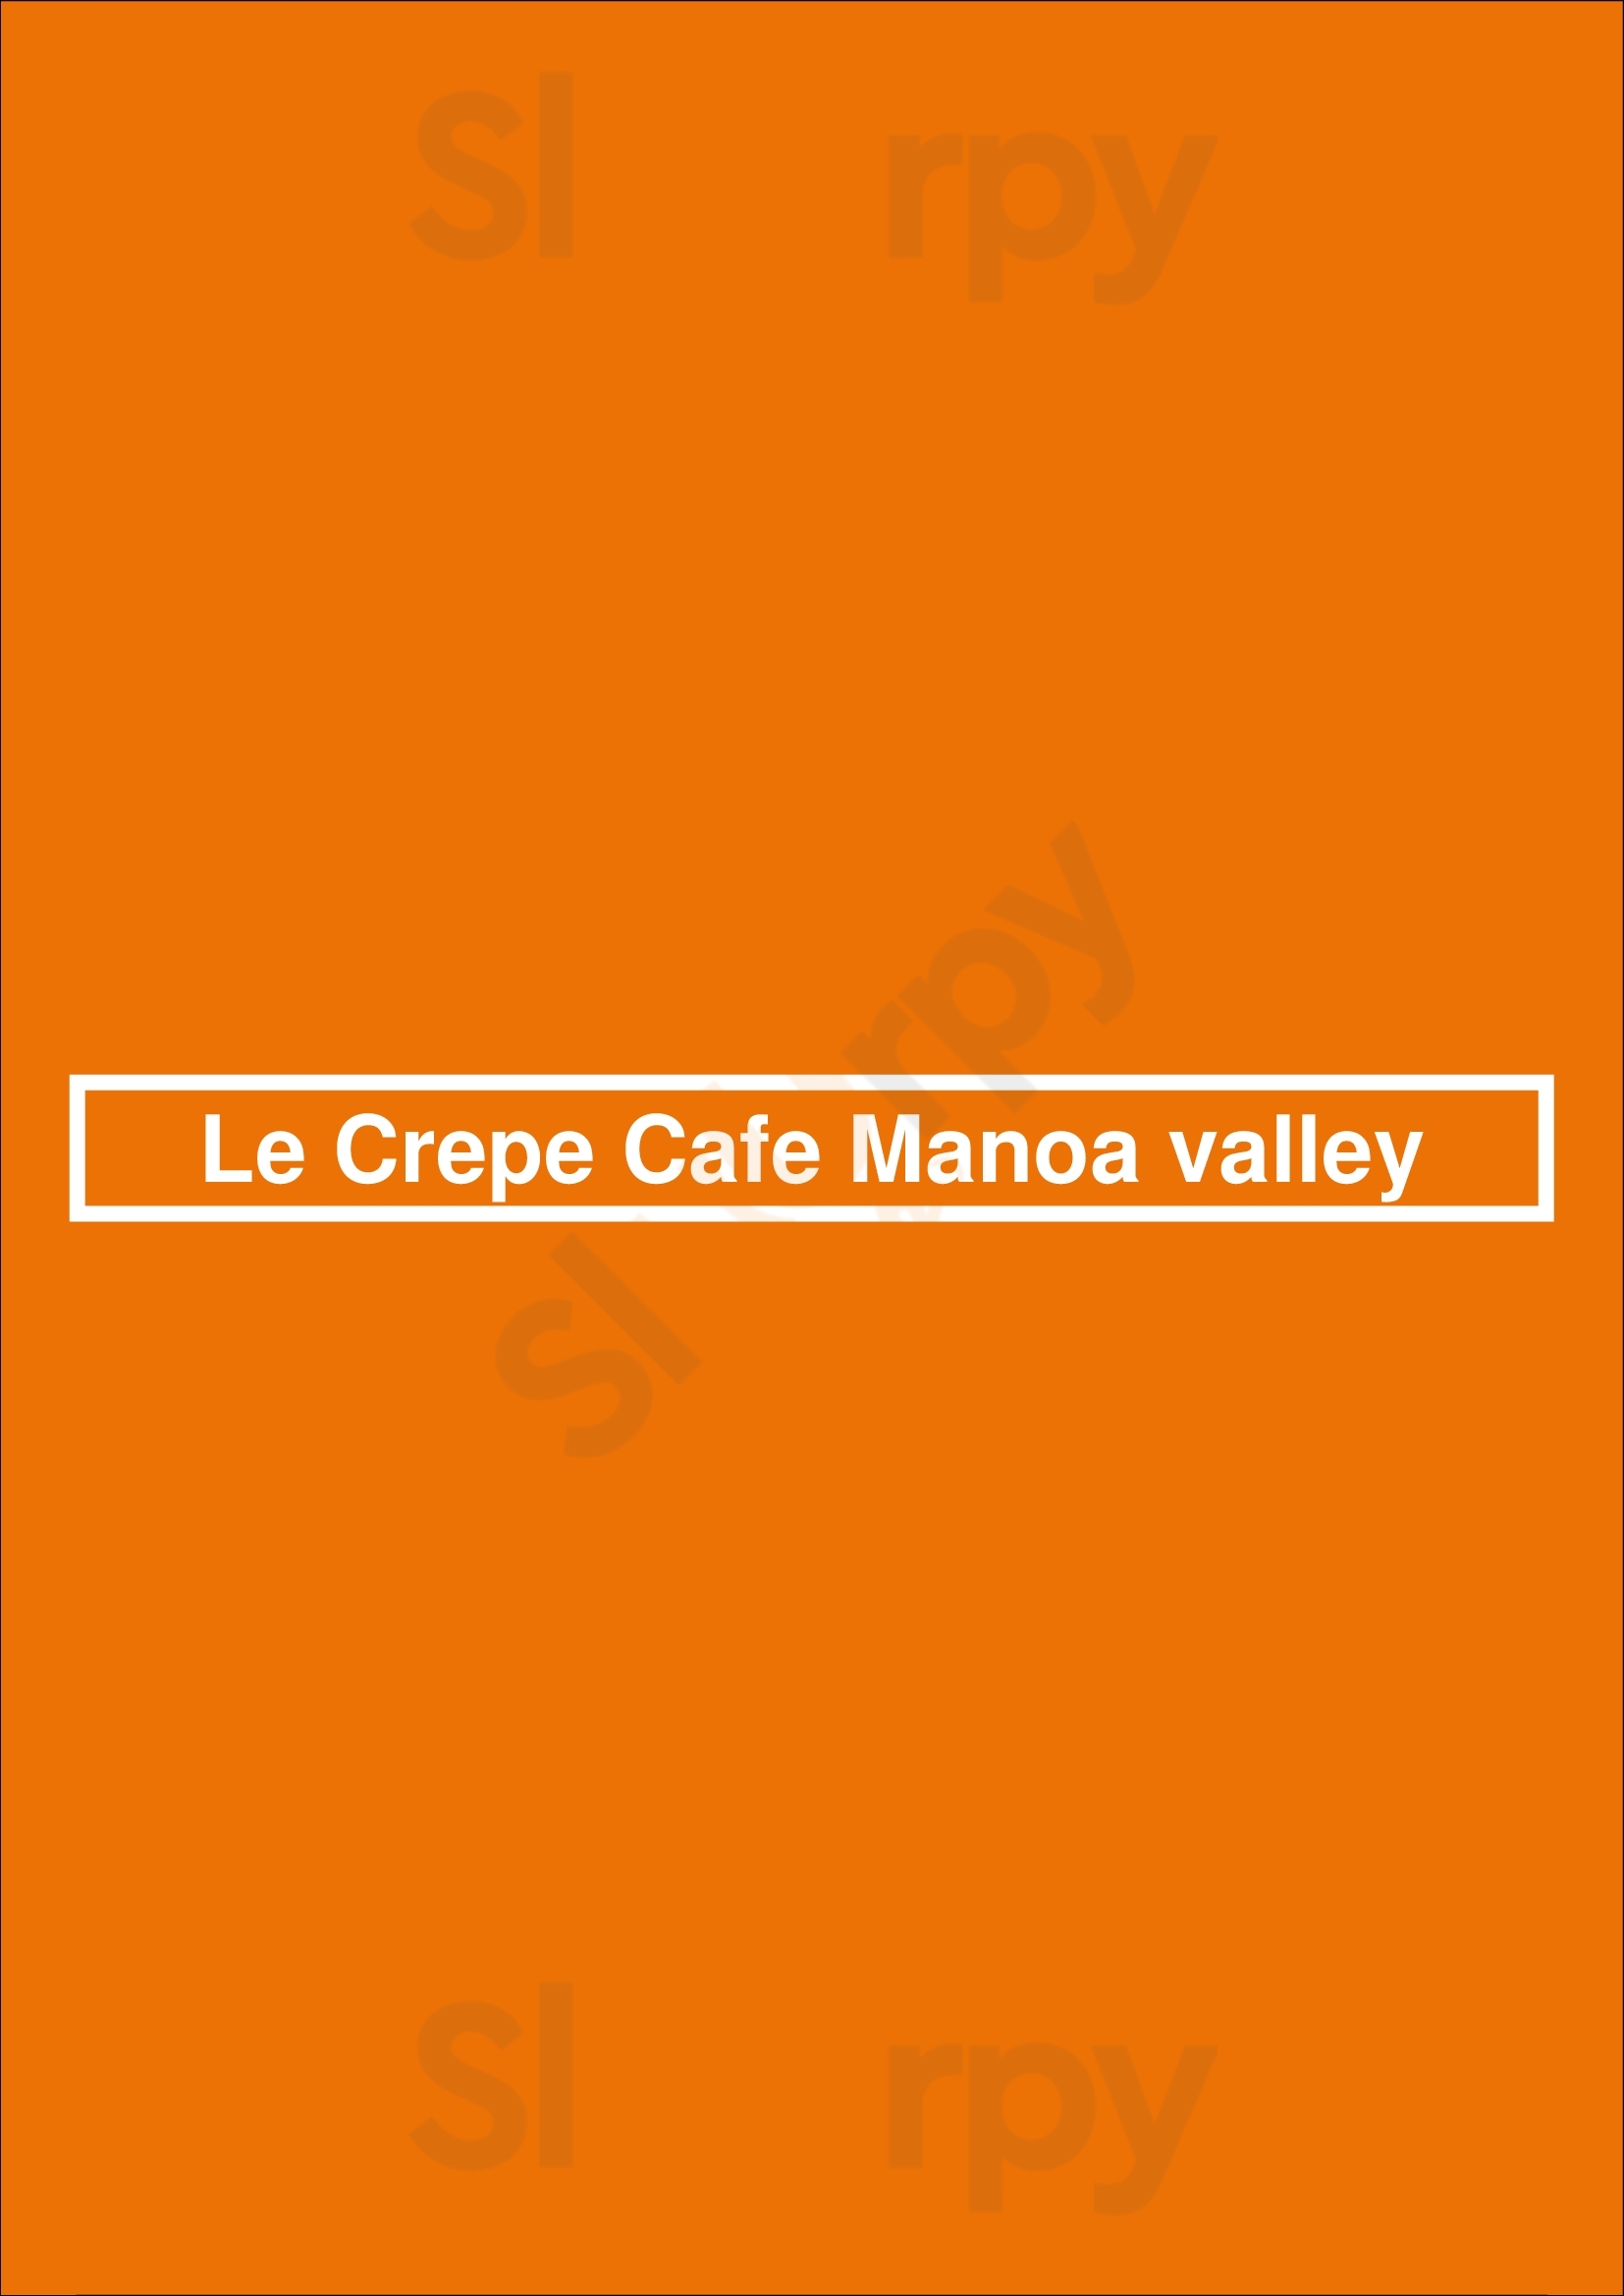 Le Crepe Cafe Manoa Valley Honolulu Menu - 1